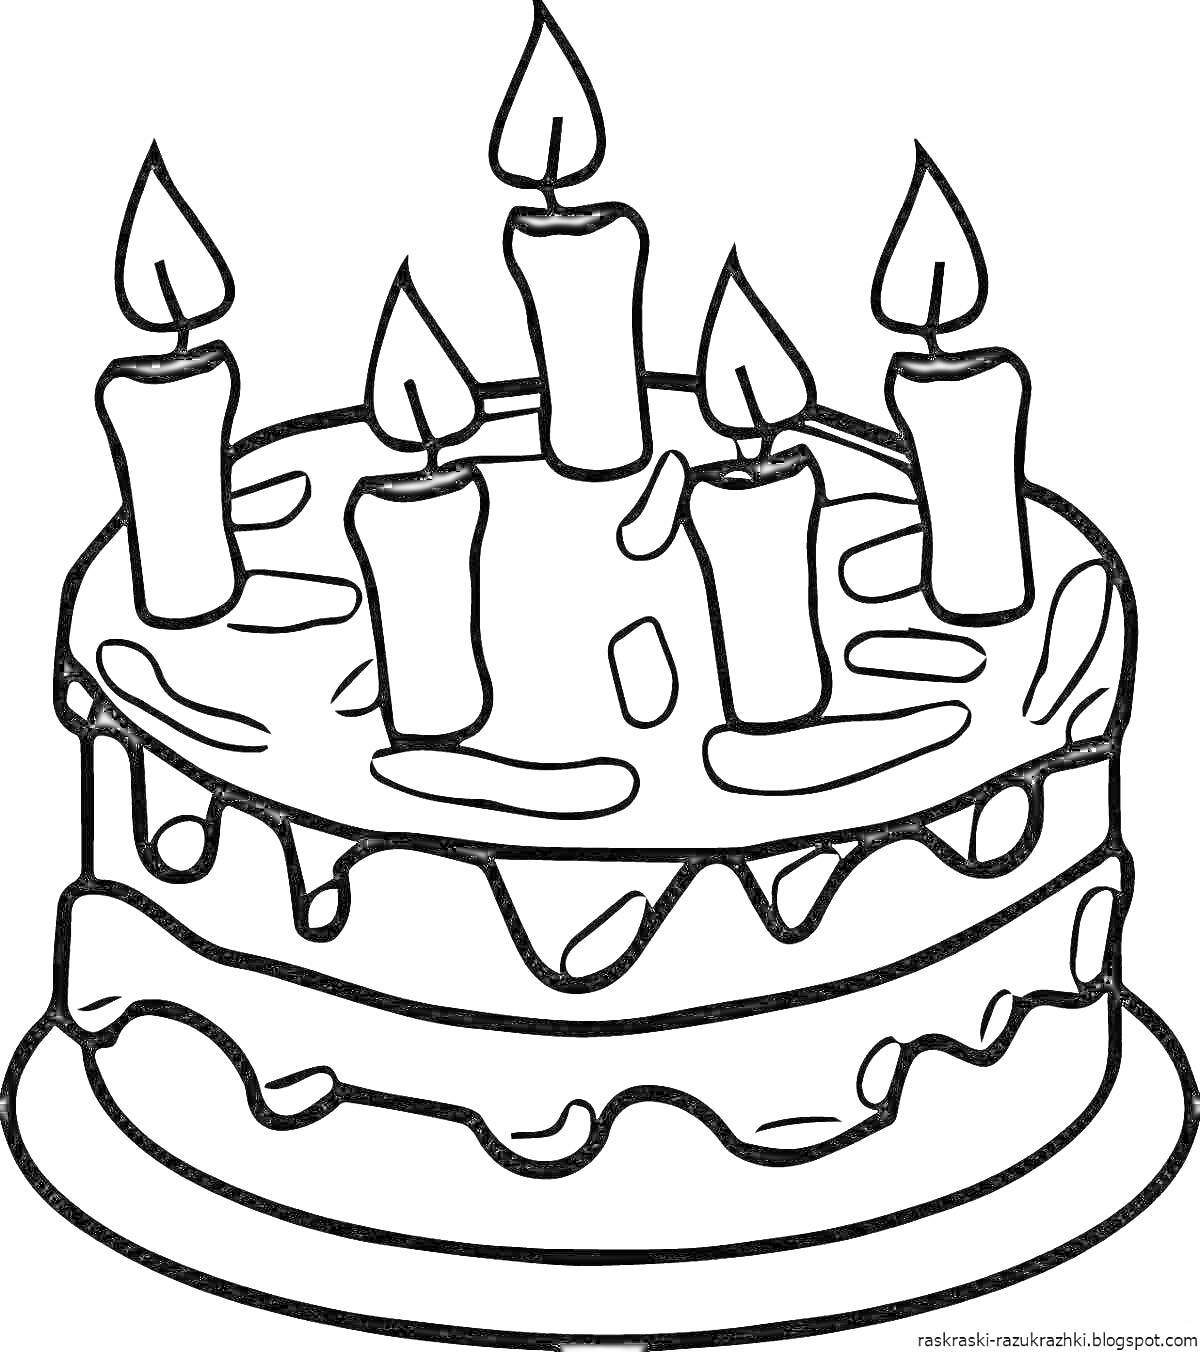 Раскраска Торт с пятью свечами на подносе